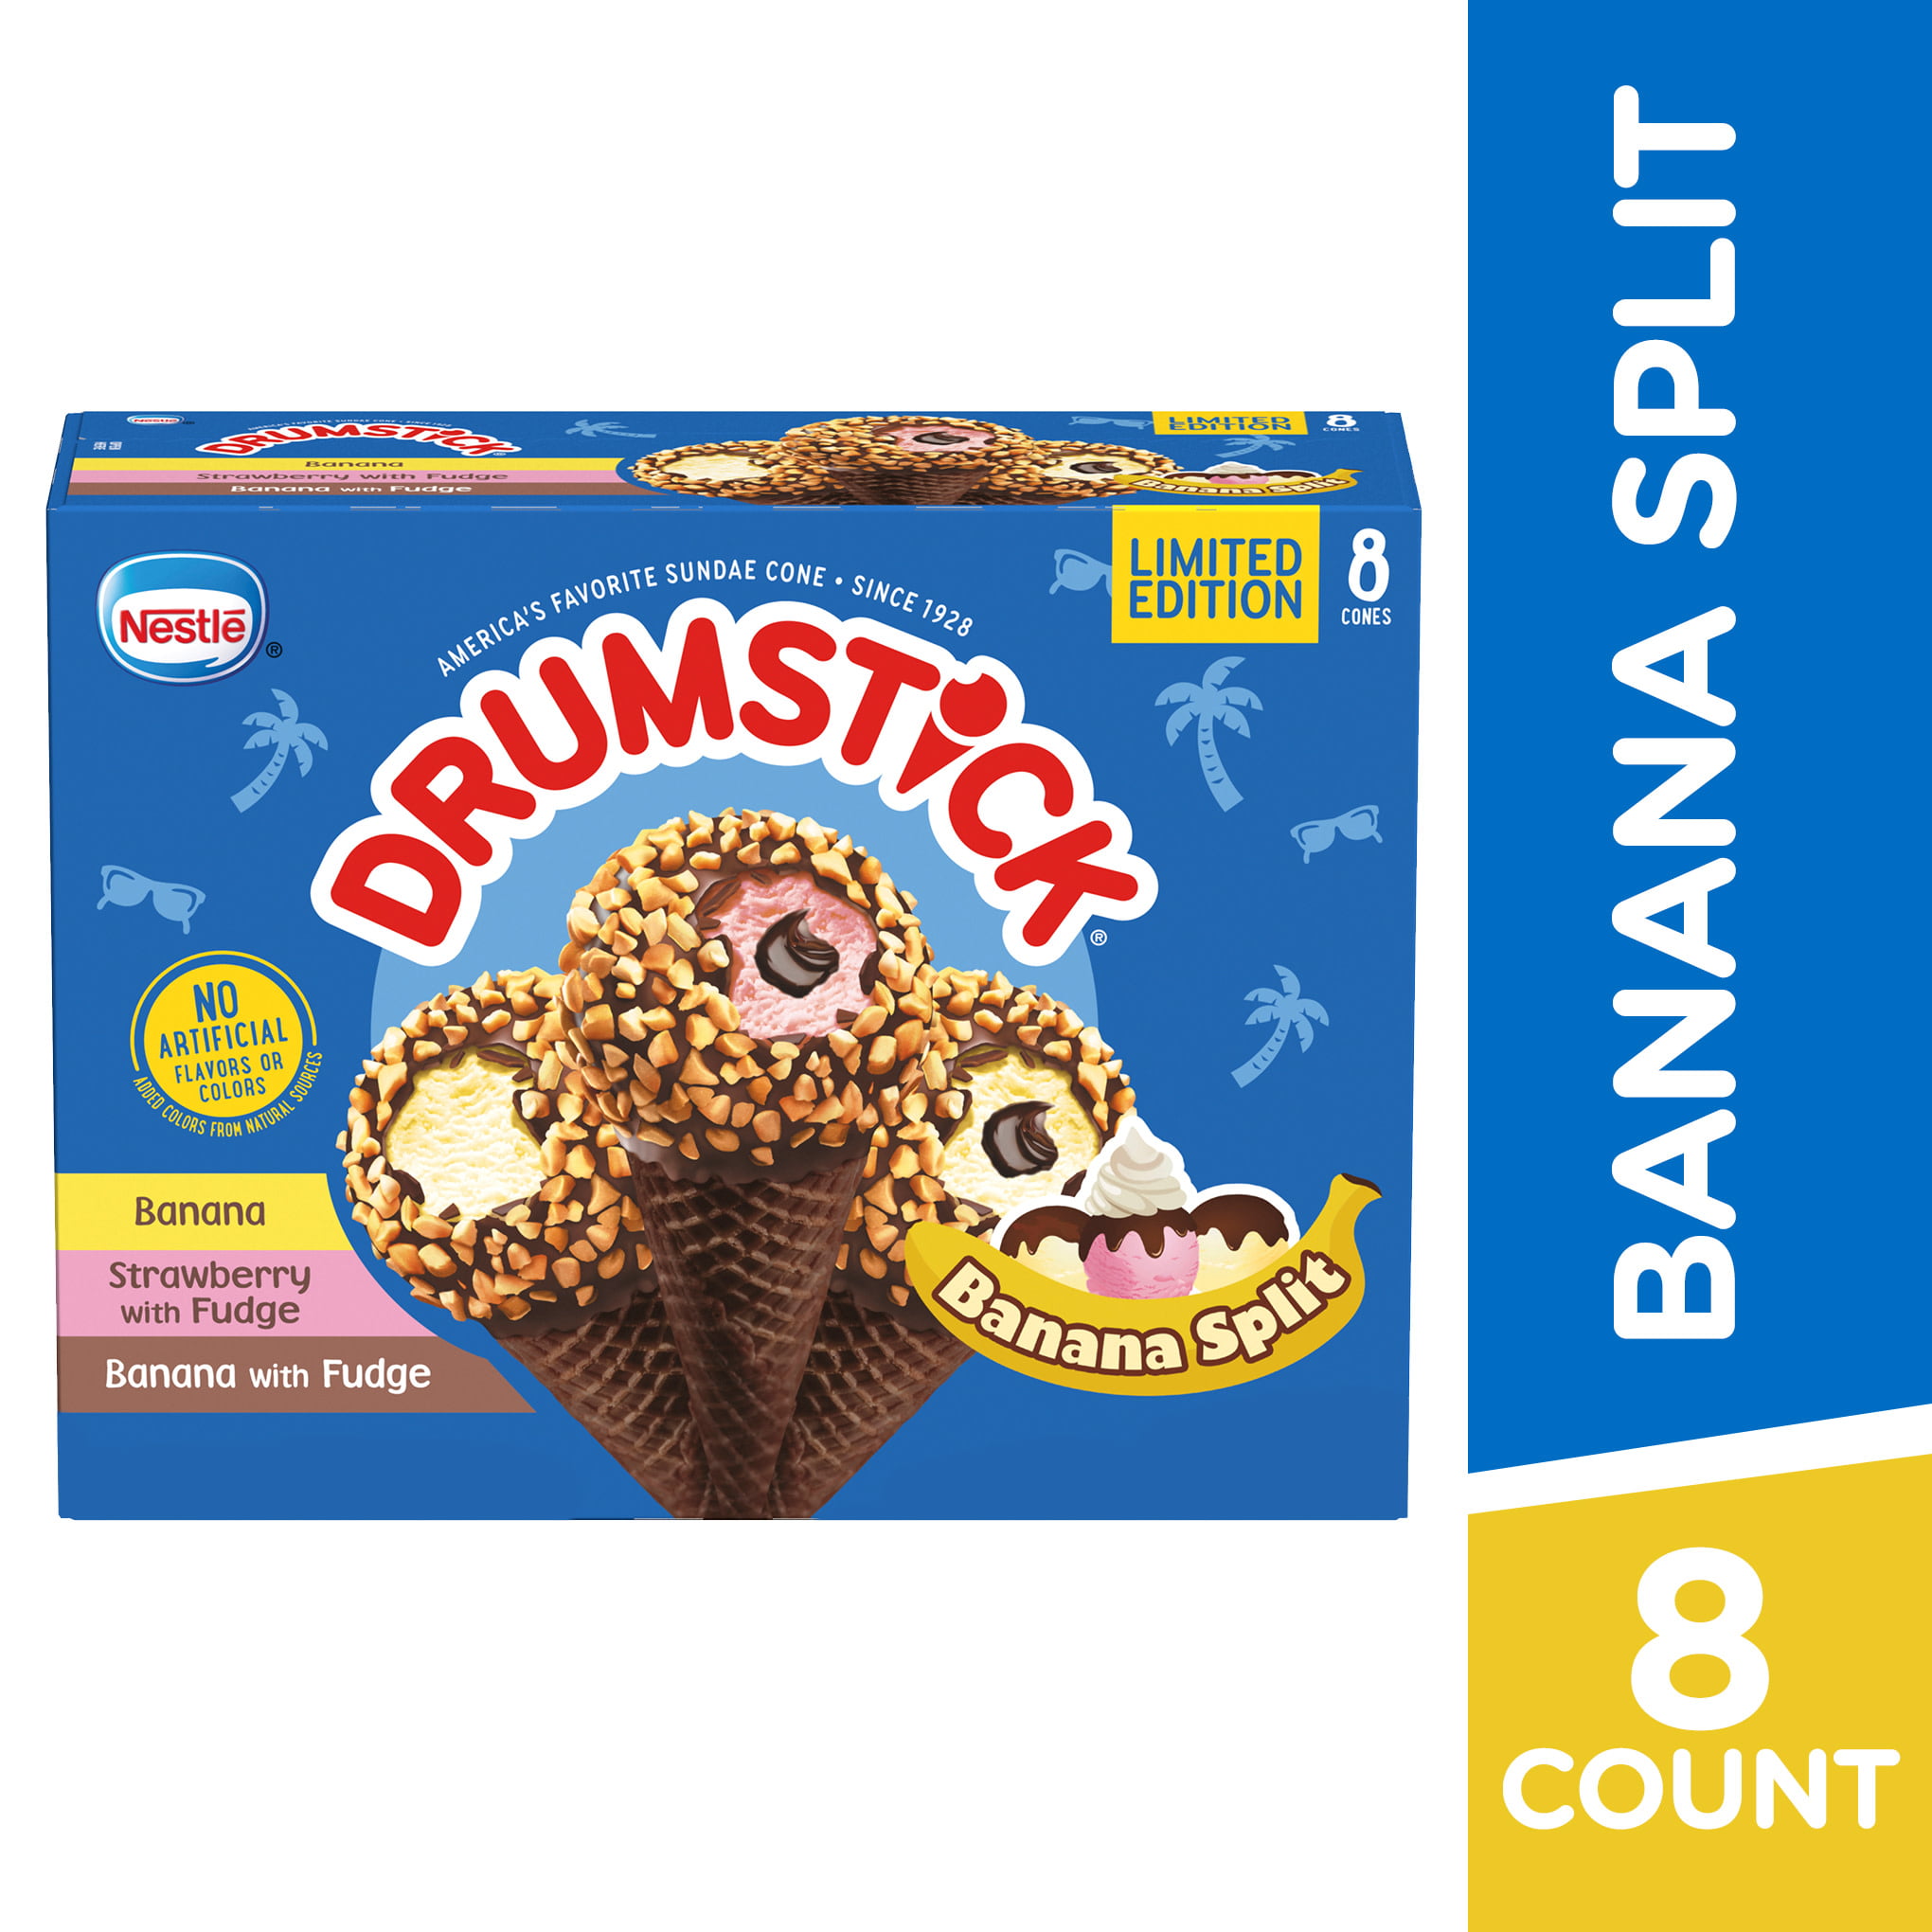 Drumstick Banana Split Sundae Cones Variety Pack - 8 Count